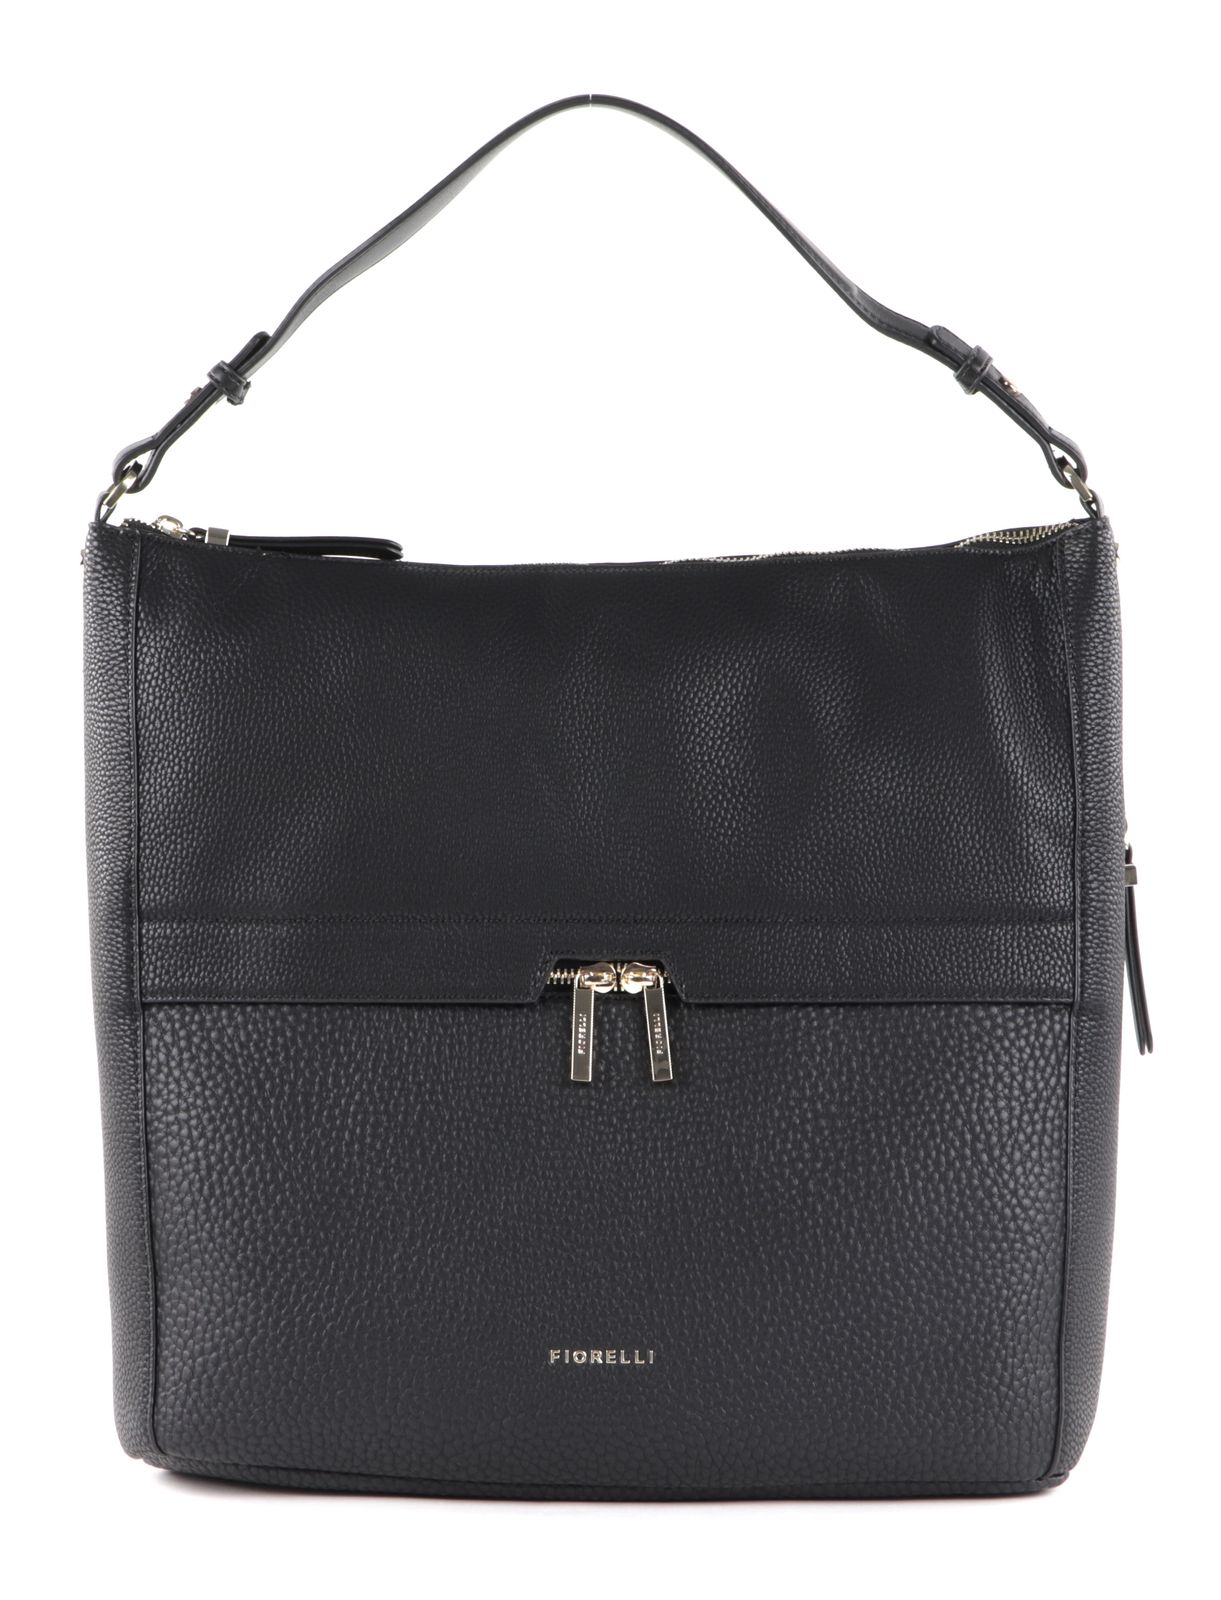 FIORELLI Benny Hobo L Black | Buy bags, purses & accessories online ...